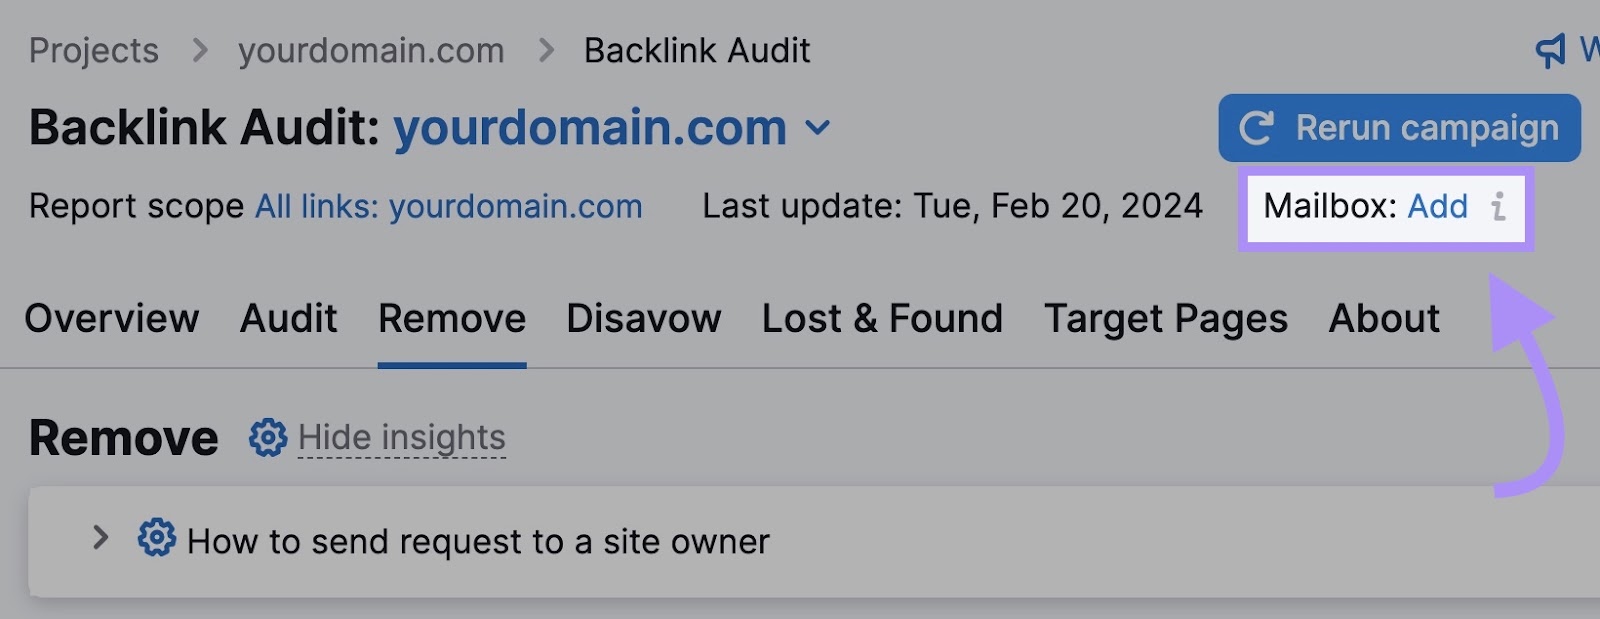 “Mailbox: Add” link in Backlink Audit